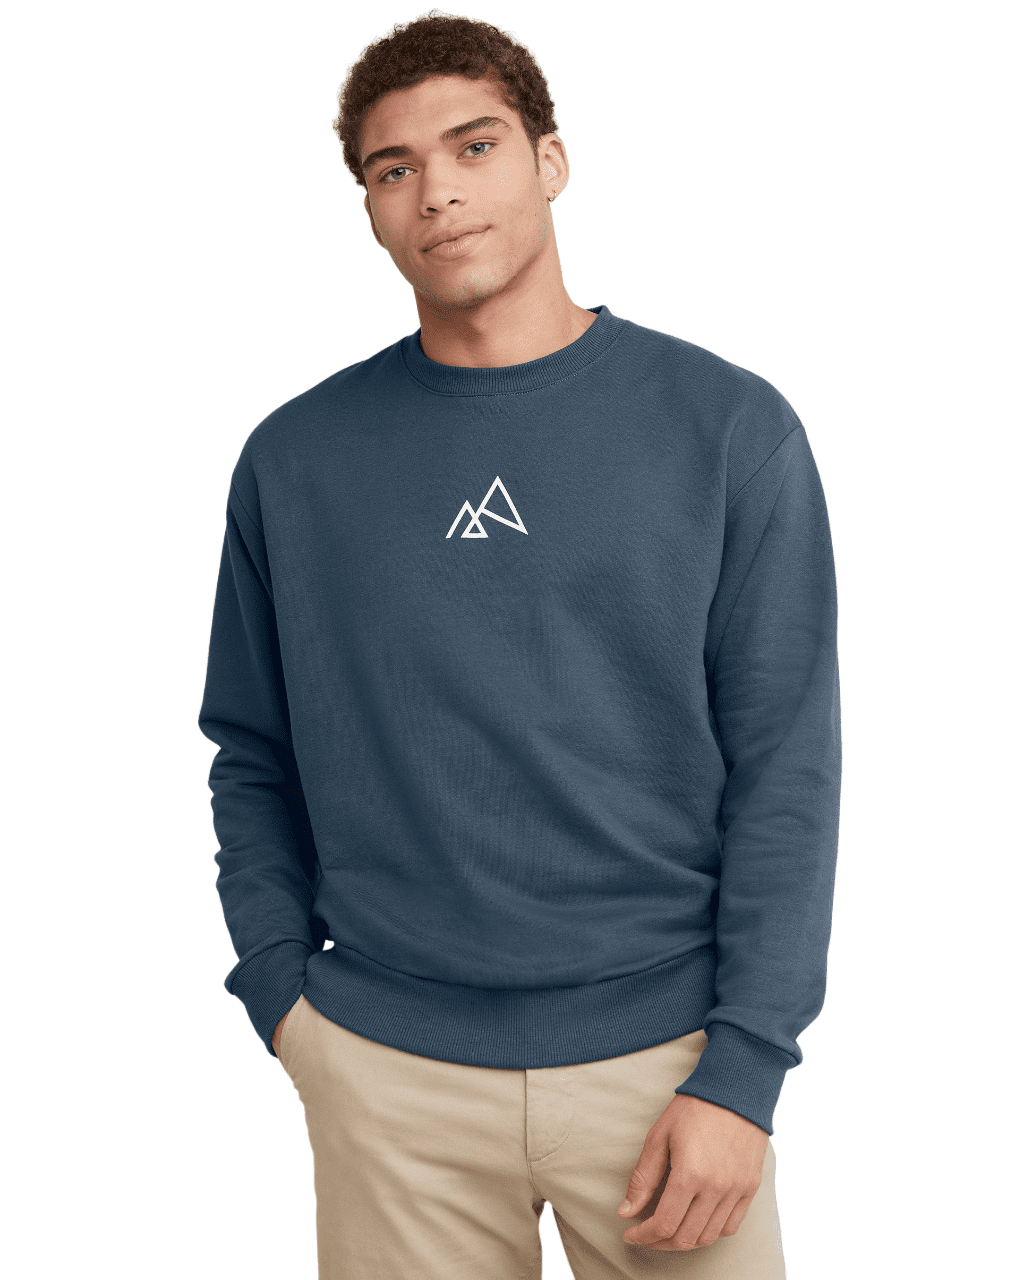 Hanes Explorer Adult French Terry Crewneck Sweatshirt - Apparel Direct  Distributor